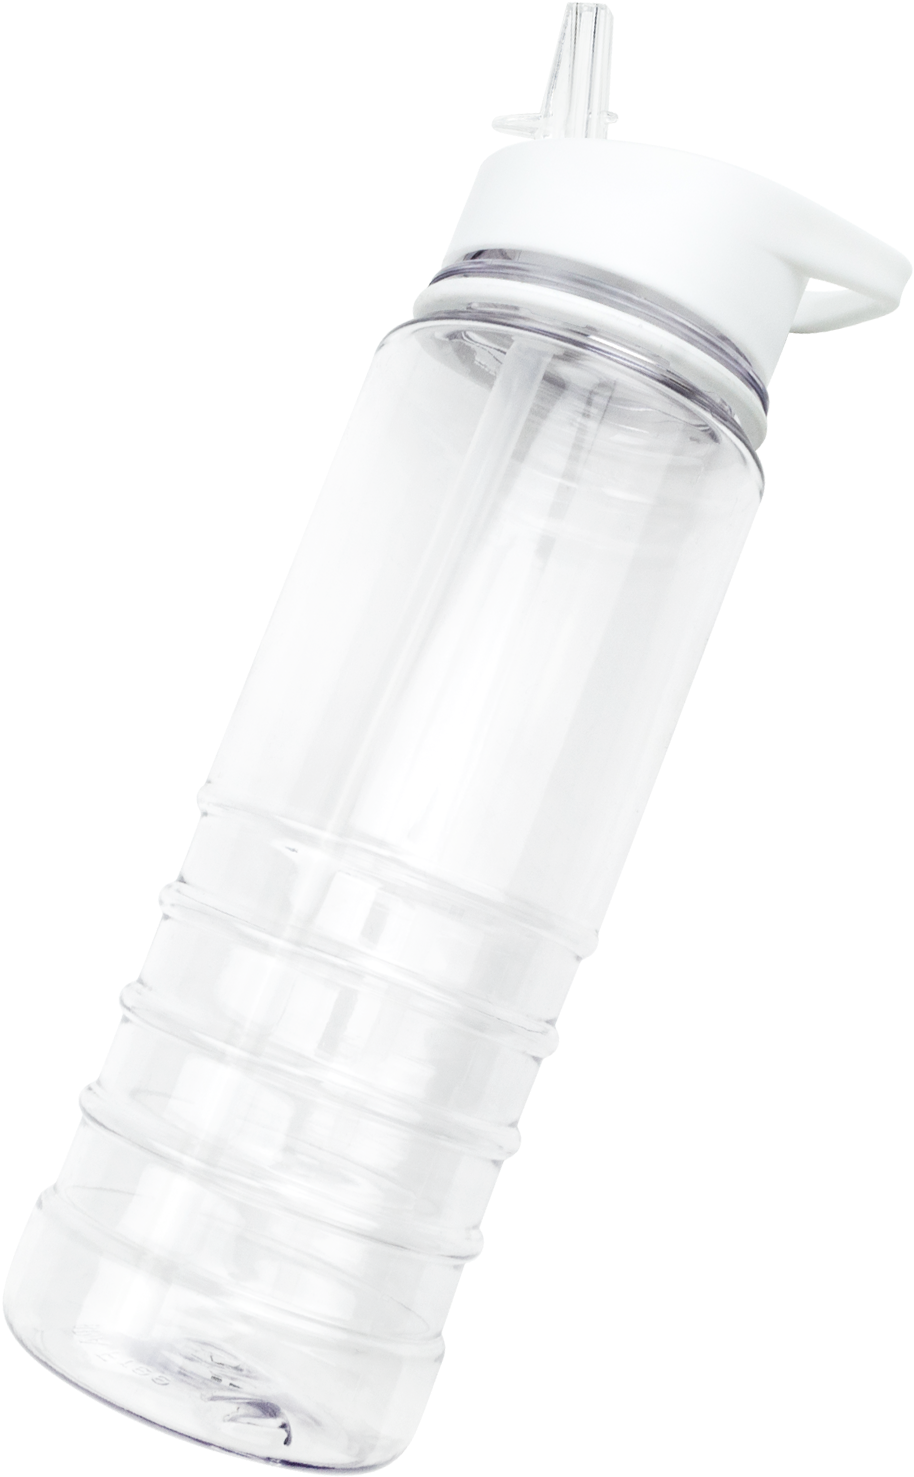 Smart Hydra Bottle - Plastic Bottle (1500x1500), Png Download